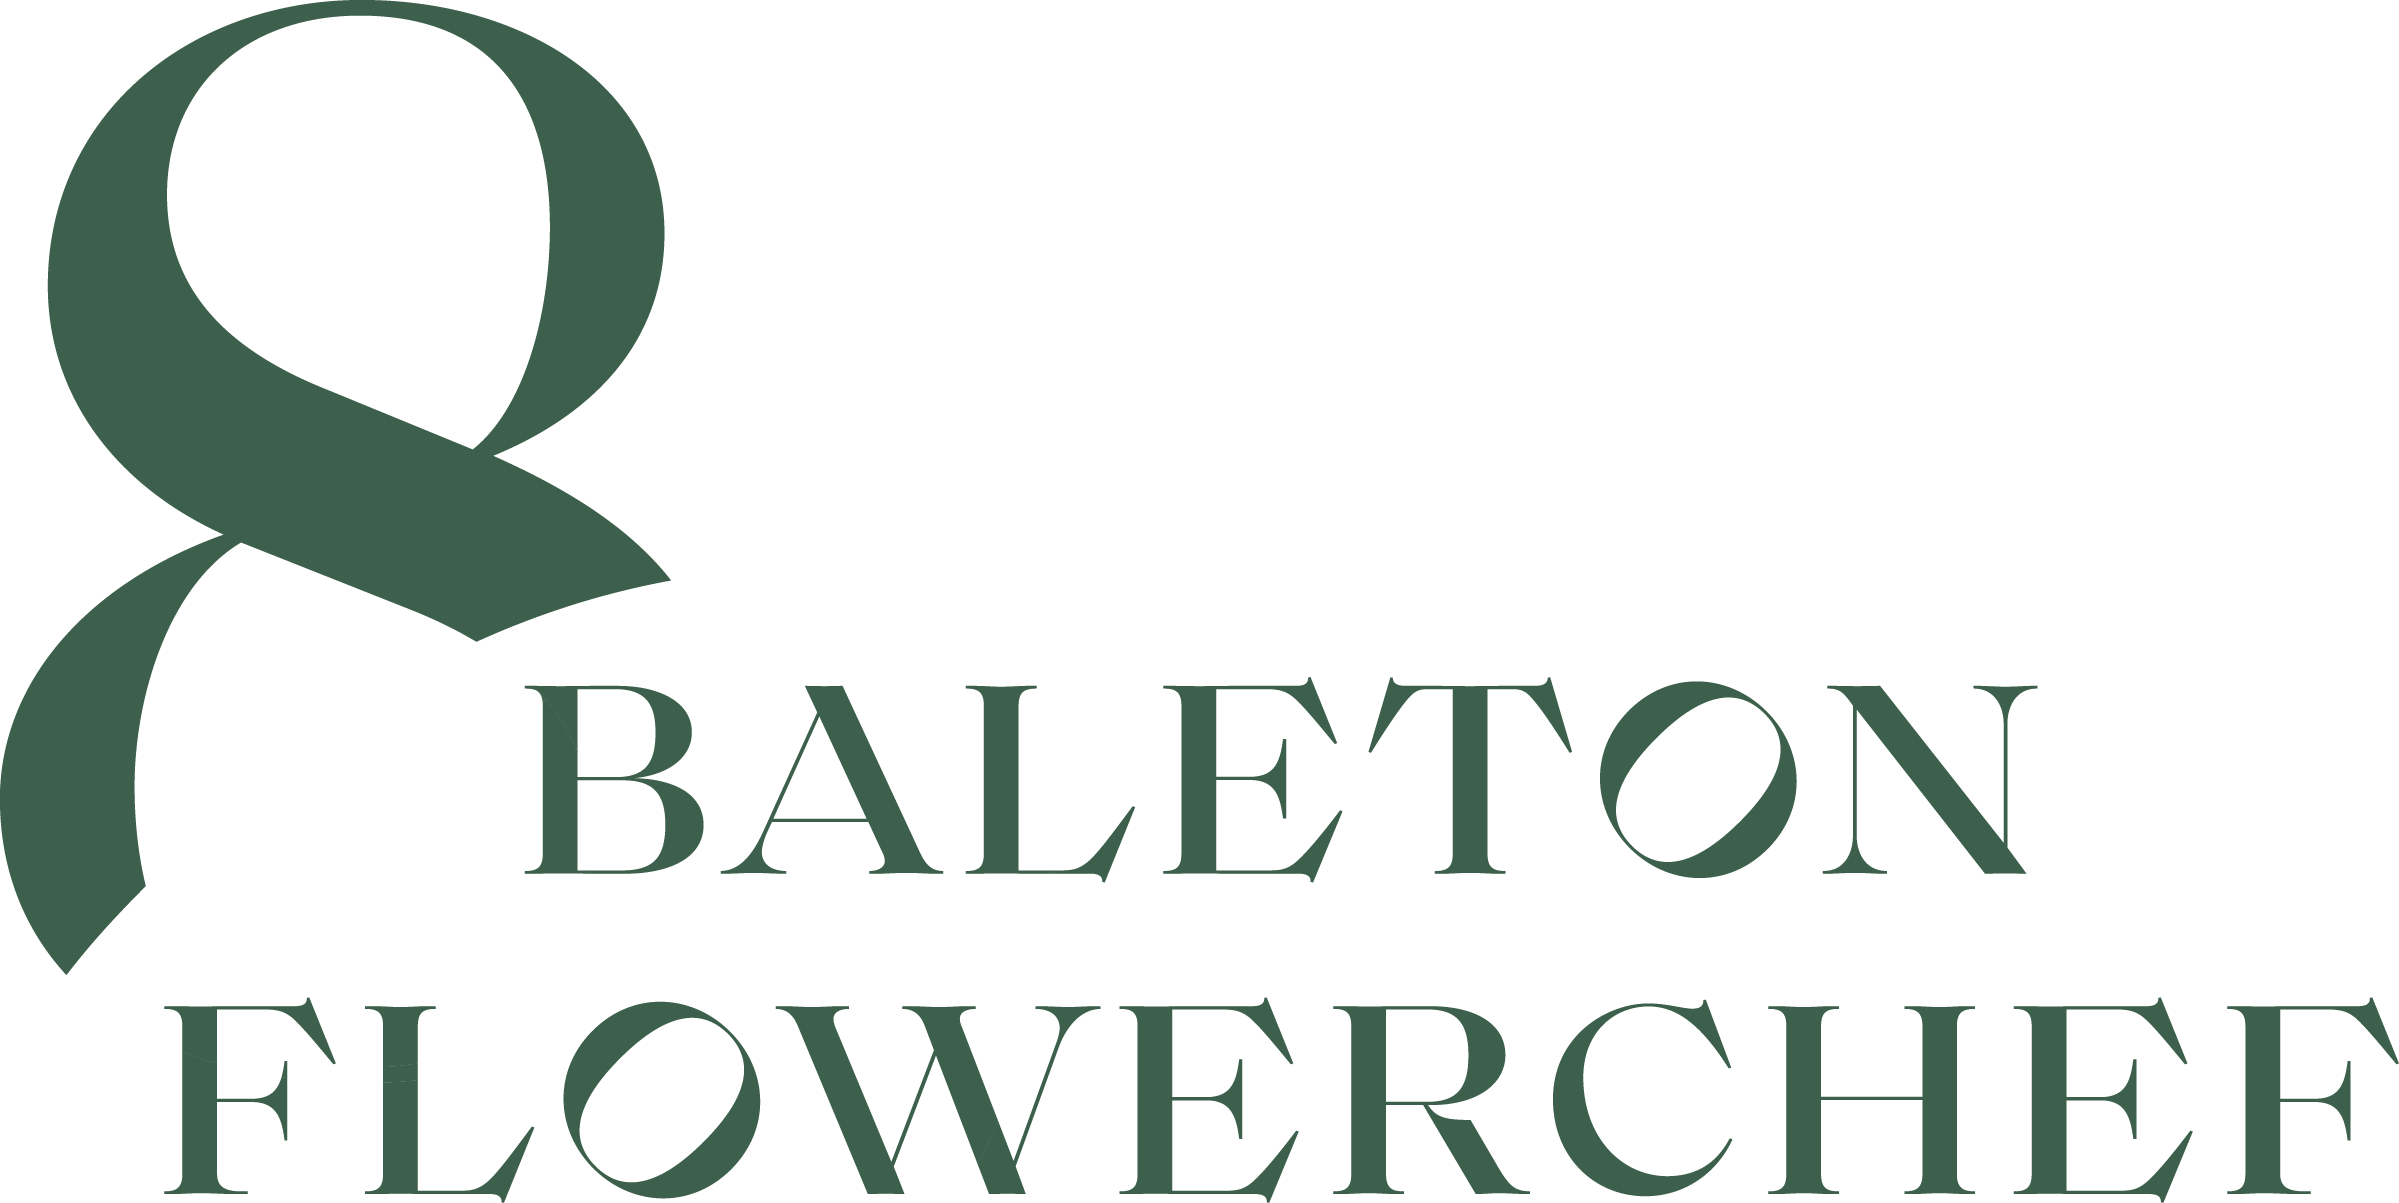 Baleton Flower Chef